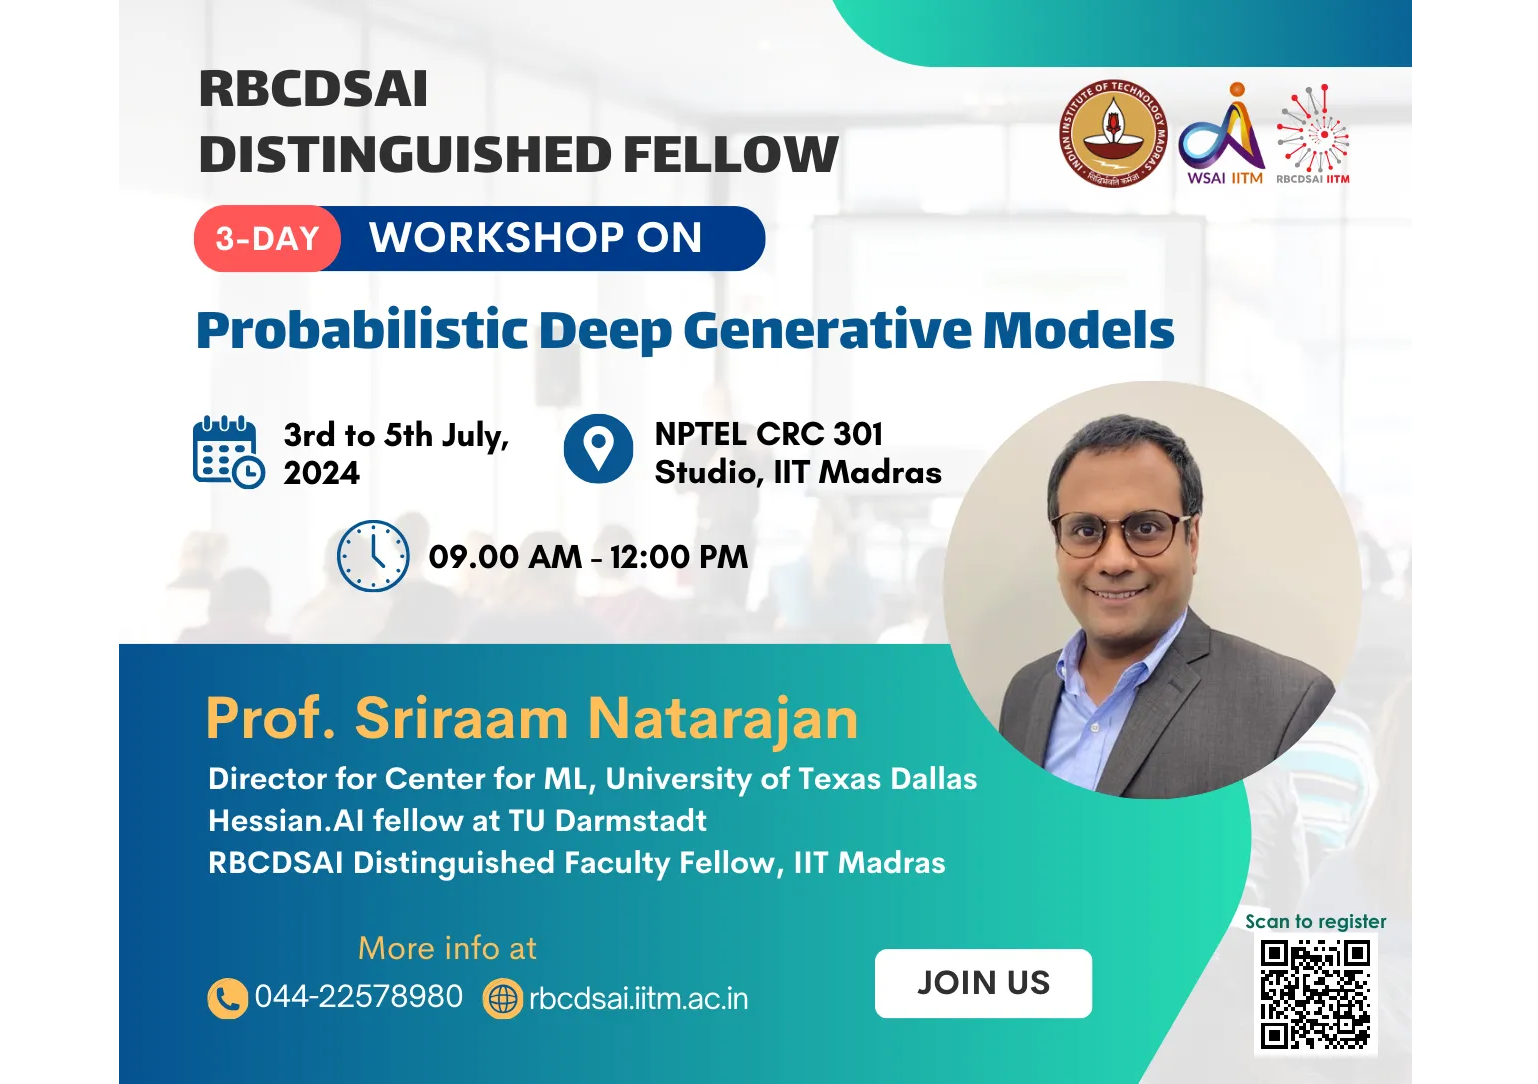 RBCDSAI Distinguished Fellow 3-Day Workshop on Probabilistic Deep Generative Models by Prof. Sriraam Natarajan